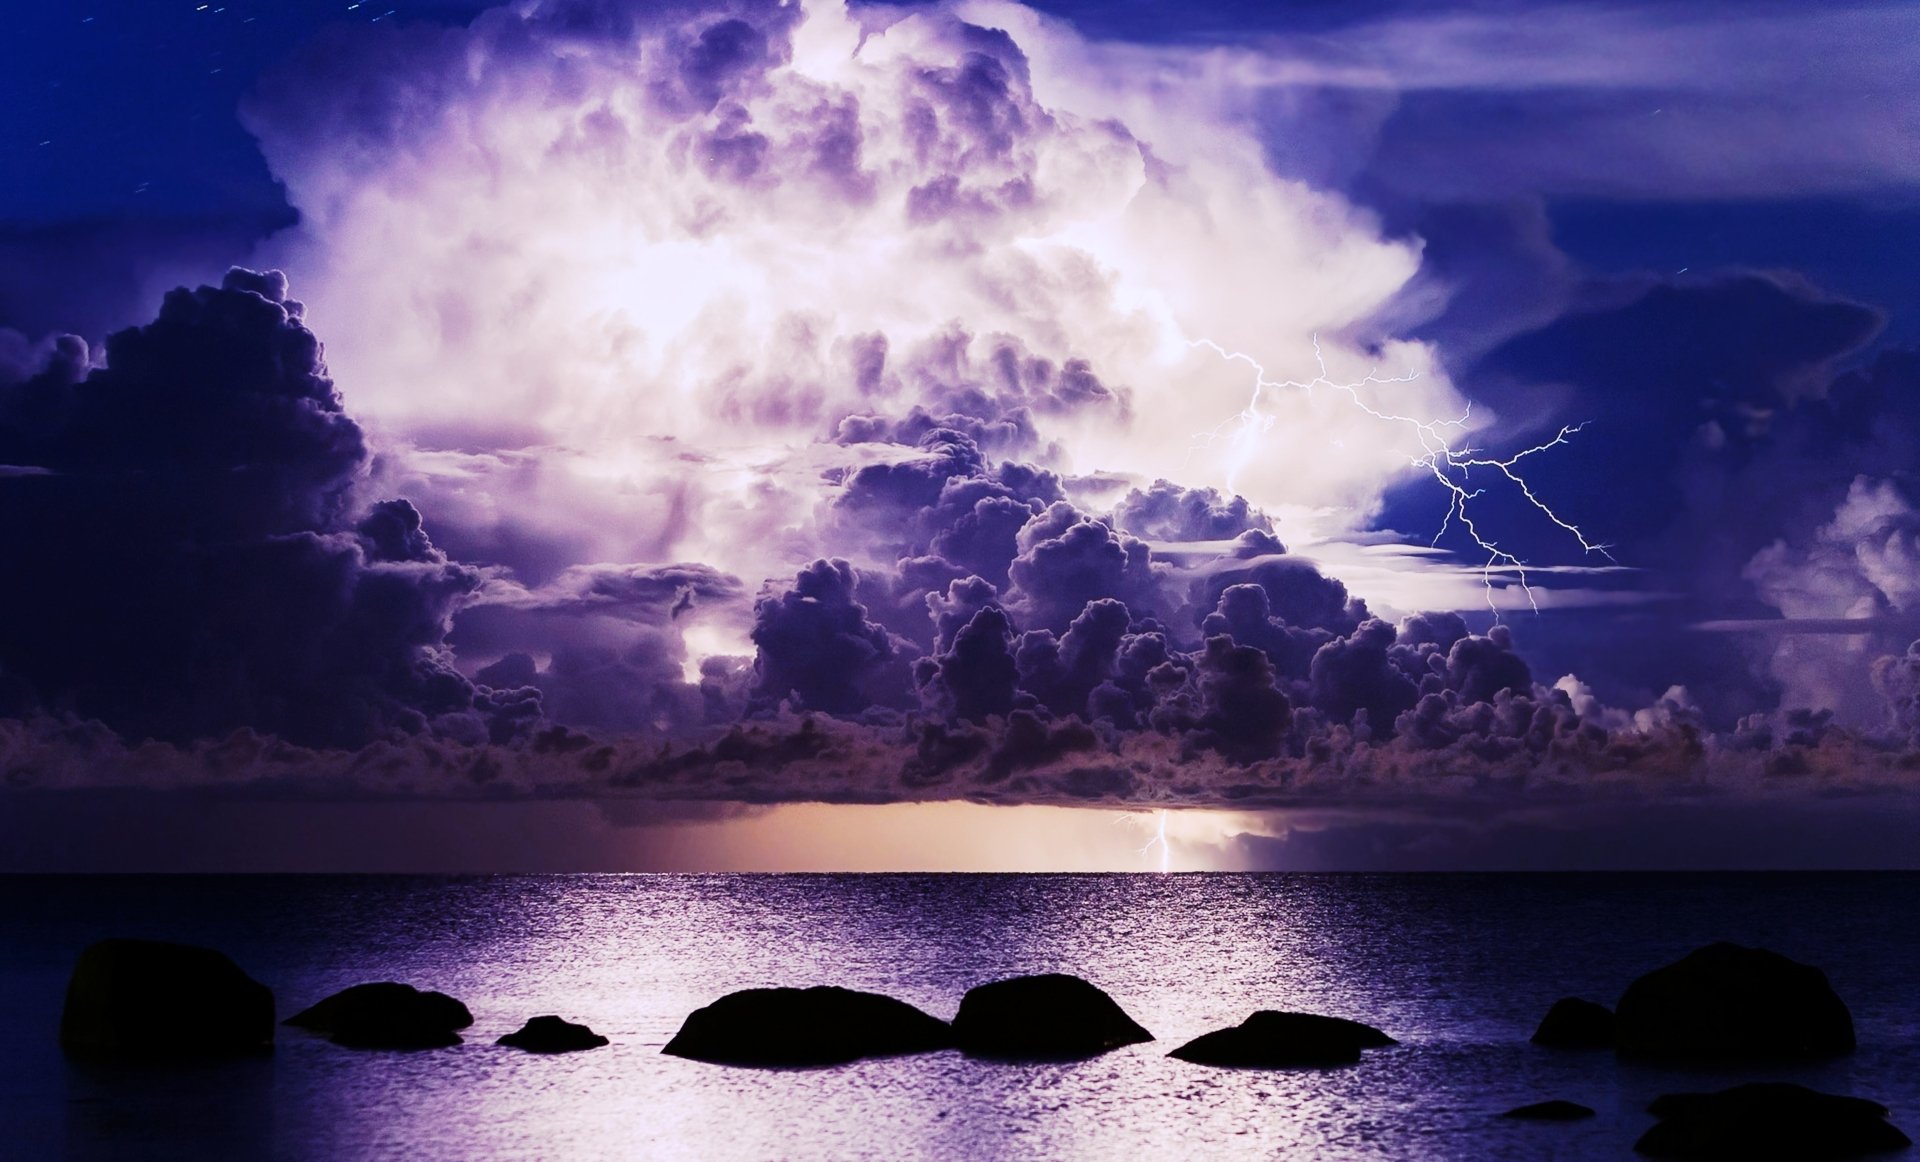  Thunder  Storm 4k  Ultra HD Wallpaper  Background Image 